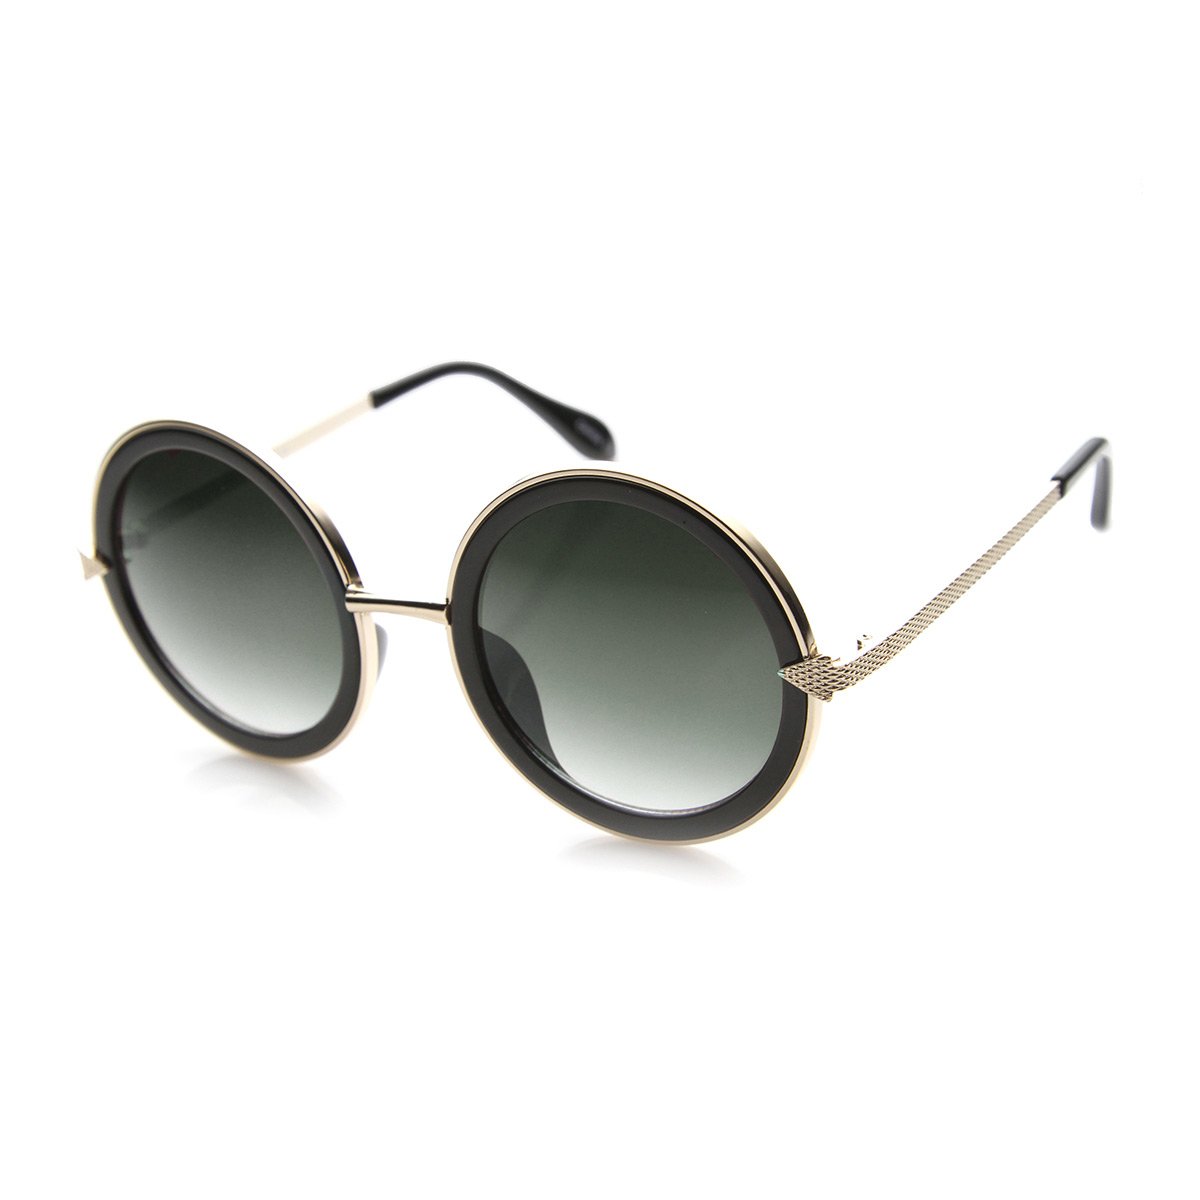 Womens High Fashion Metal Arrow Accent Super Round Sunglasses 9791 - Shiny Black-Gold / Amber